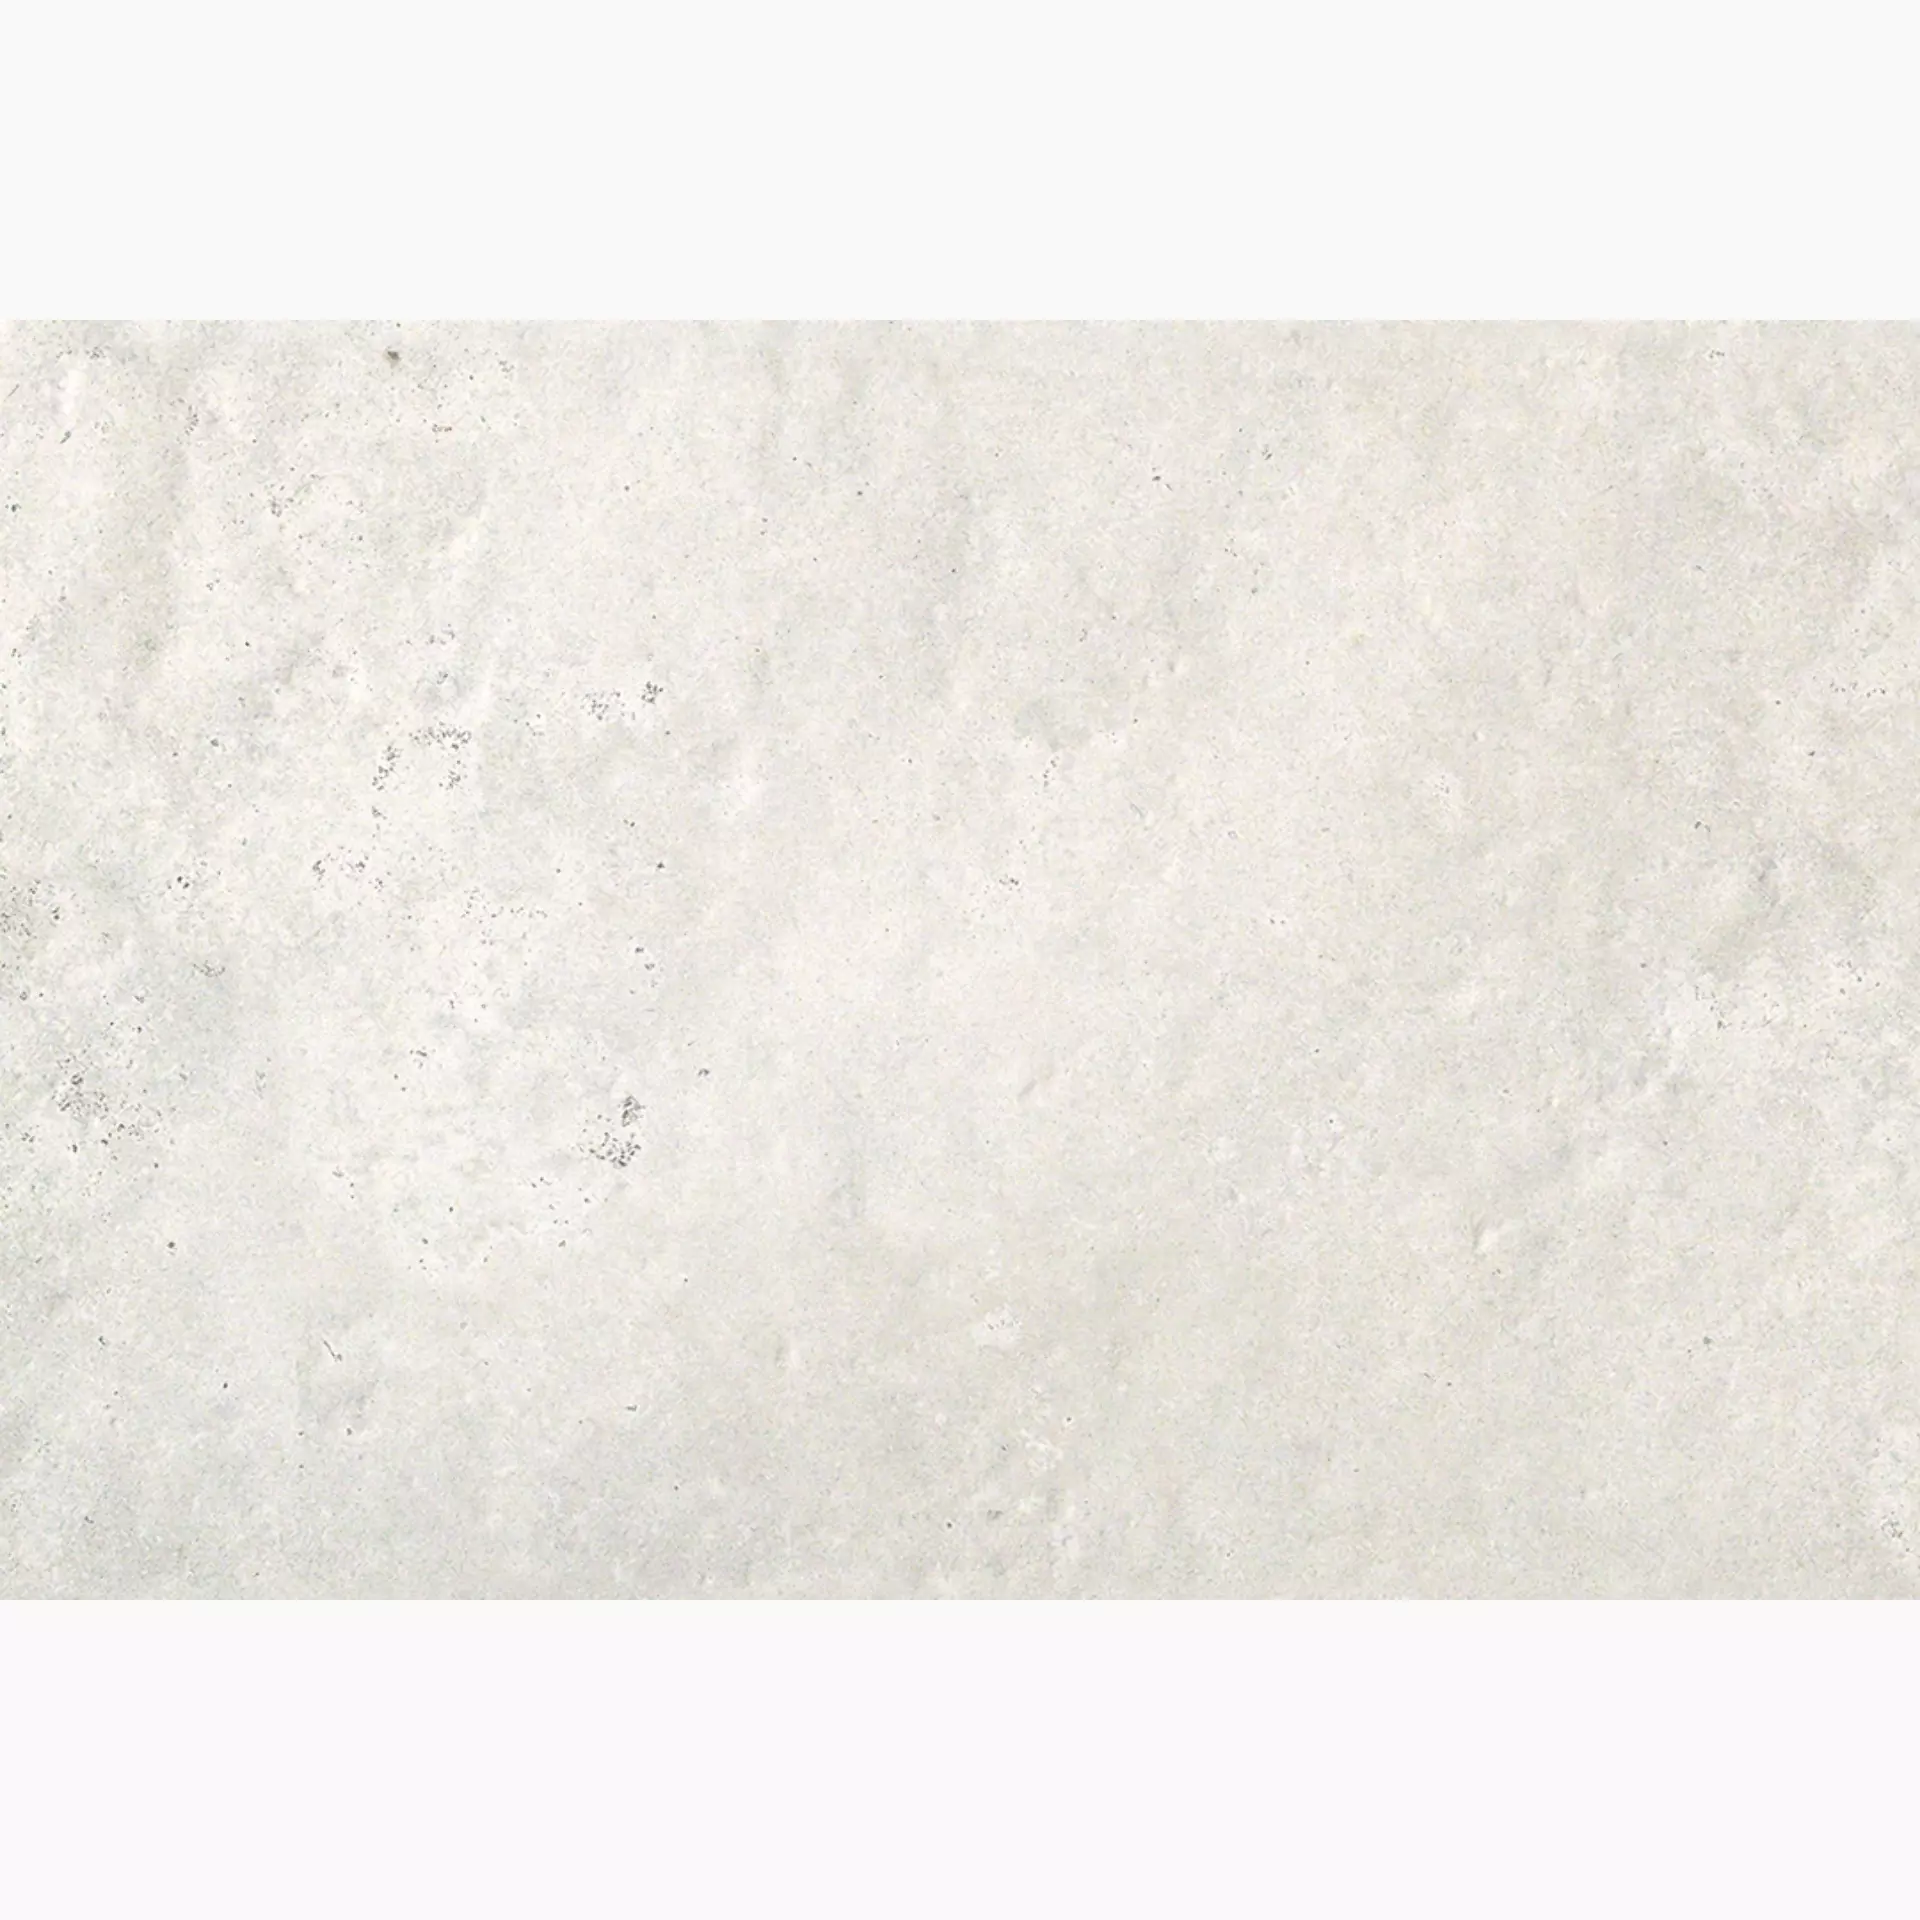 Sichenia Chambord Bianco Grip CHBER91 60x90cm rectified 10mm